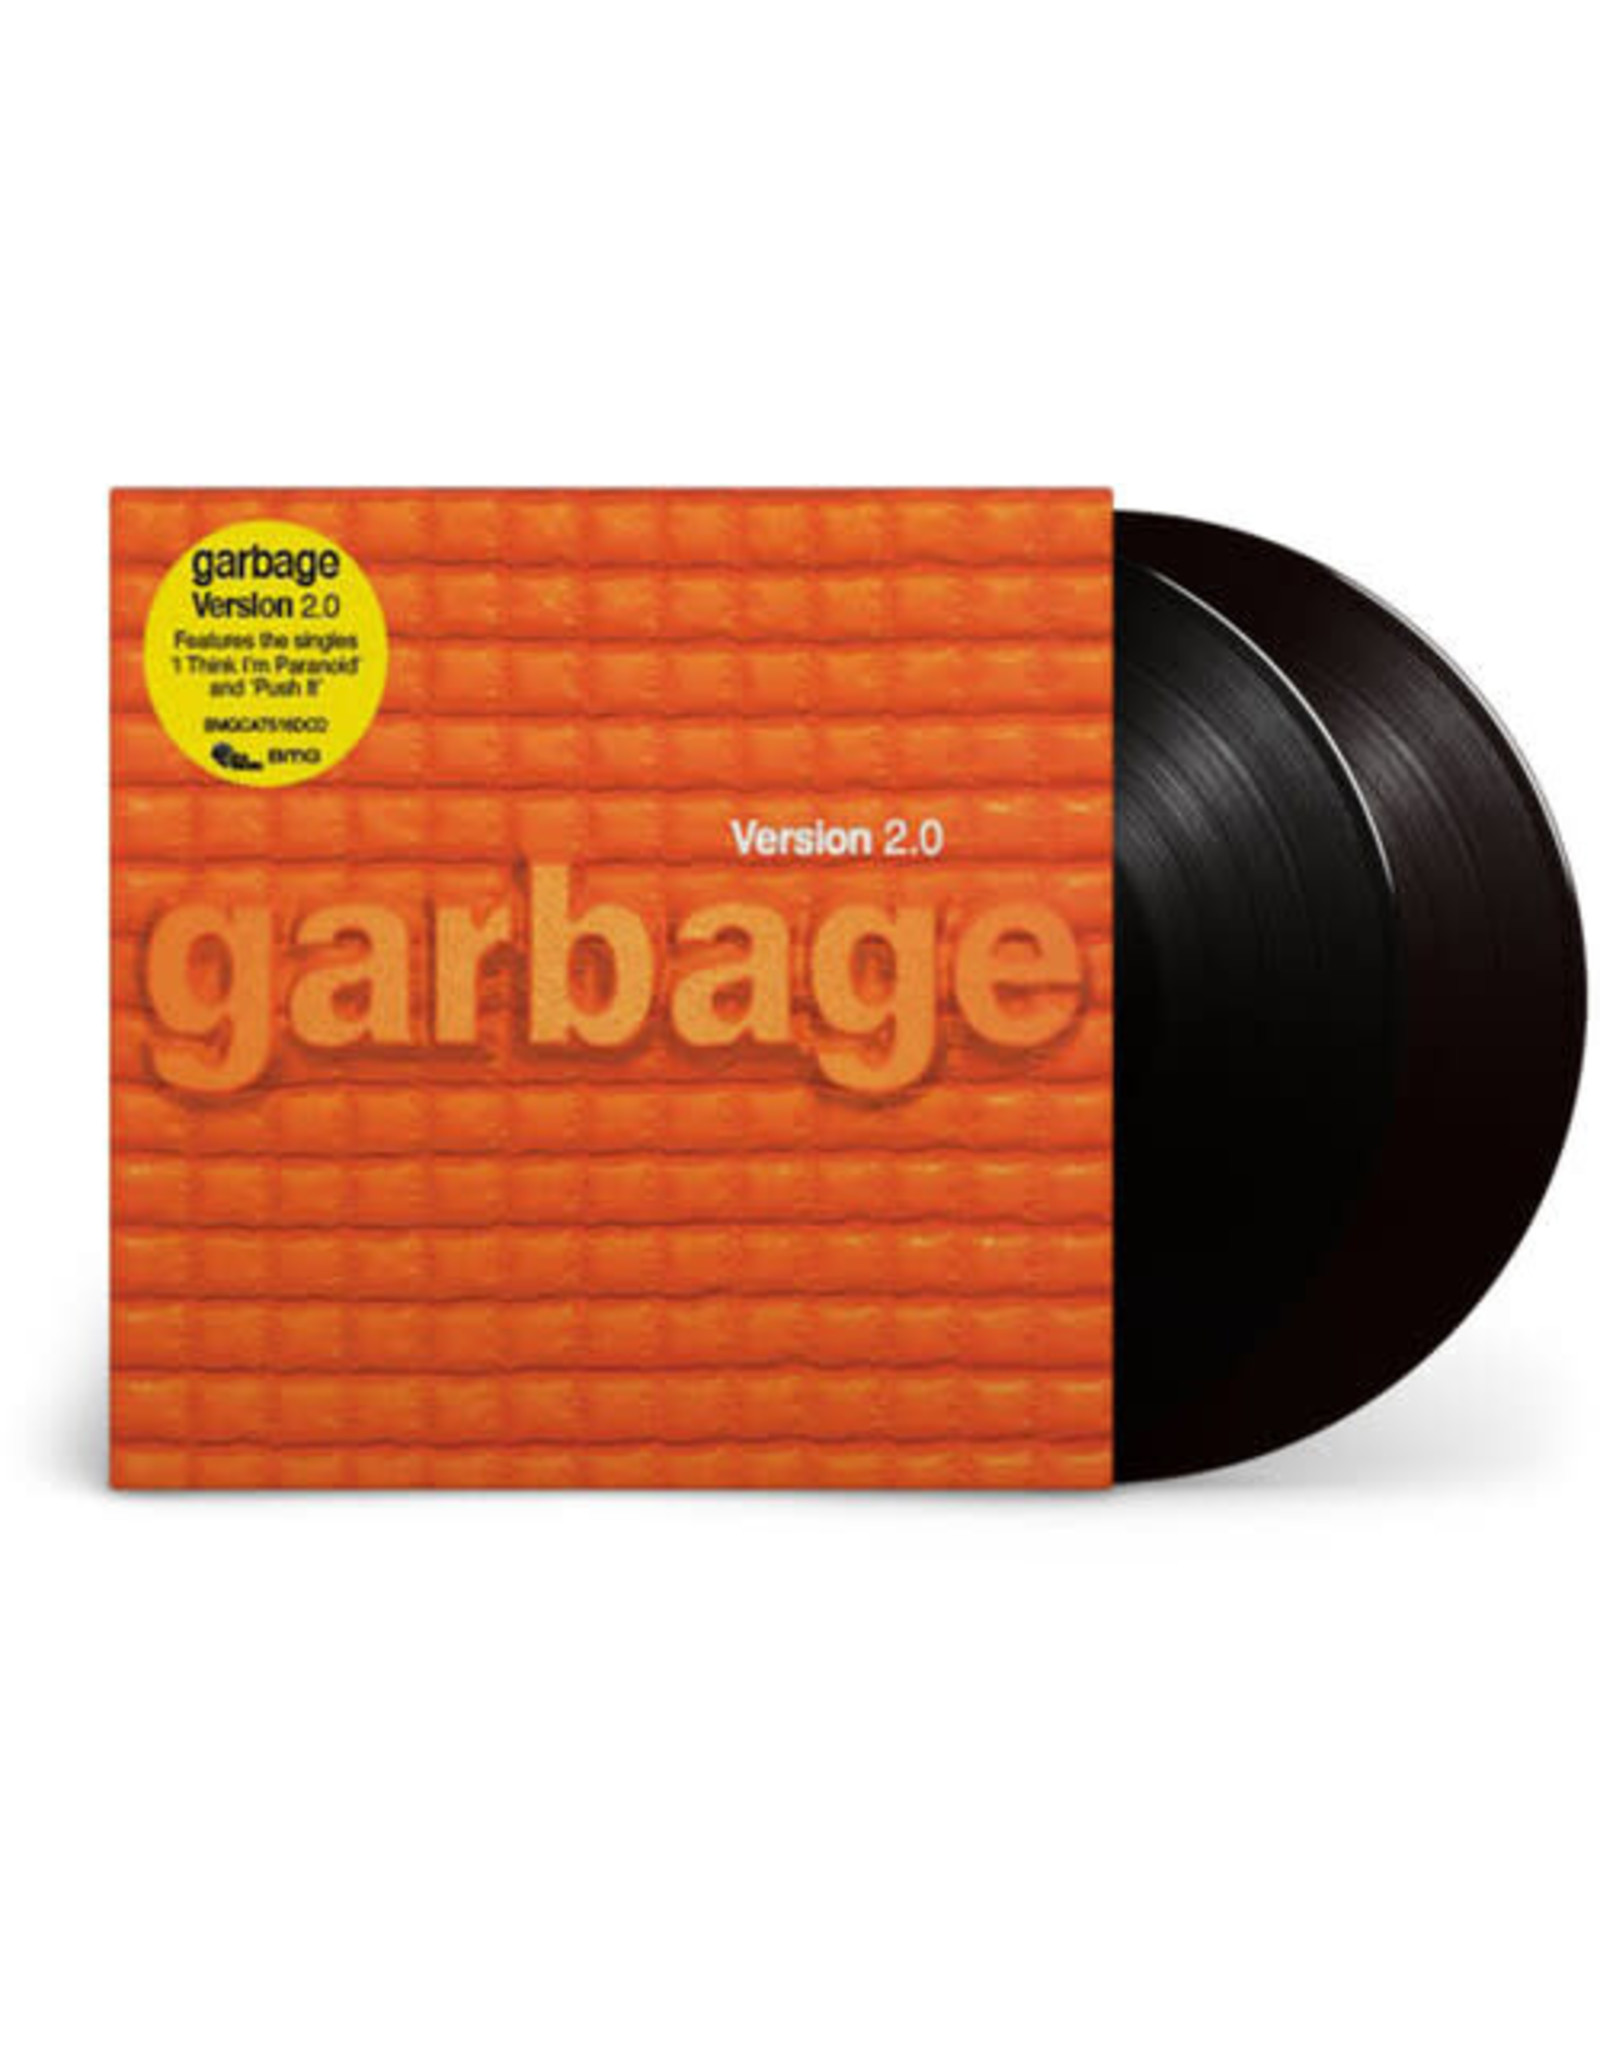 New Vinyl Garbage - Version 2.0 (Remaster) [UK Import] 2LP